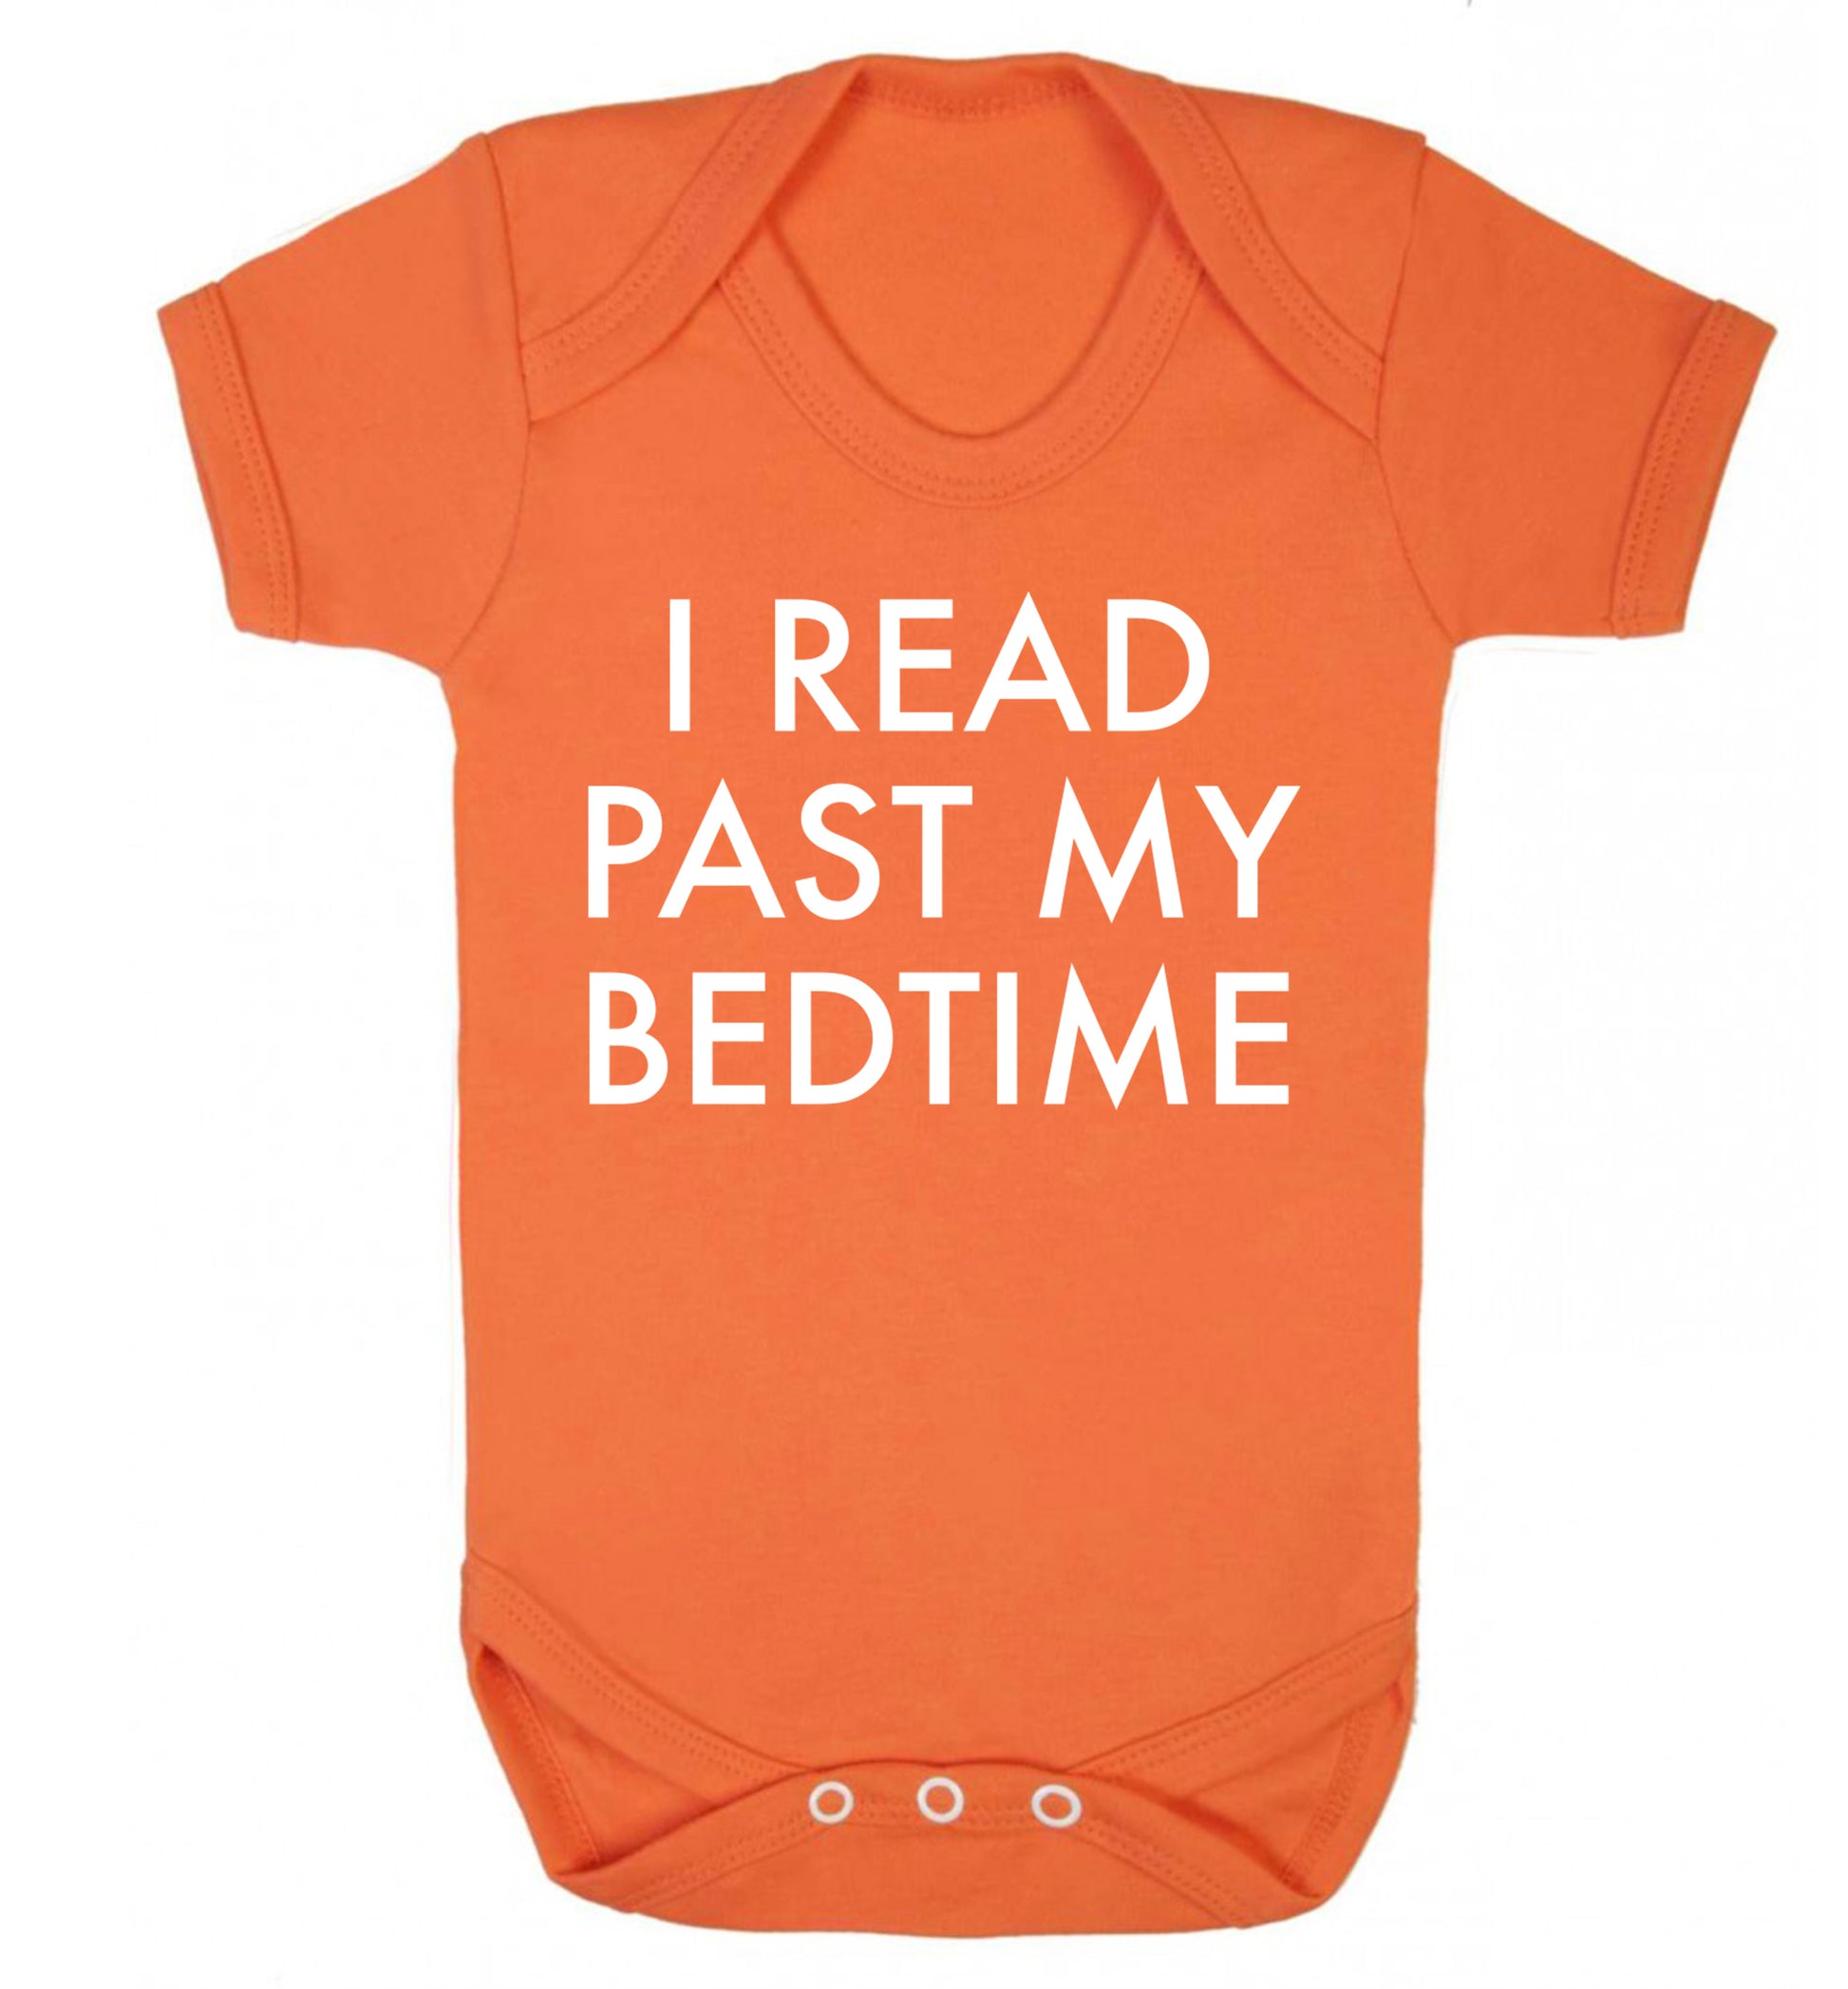 I read past my bedtime Baby Vest orange 18-24 months